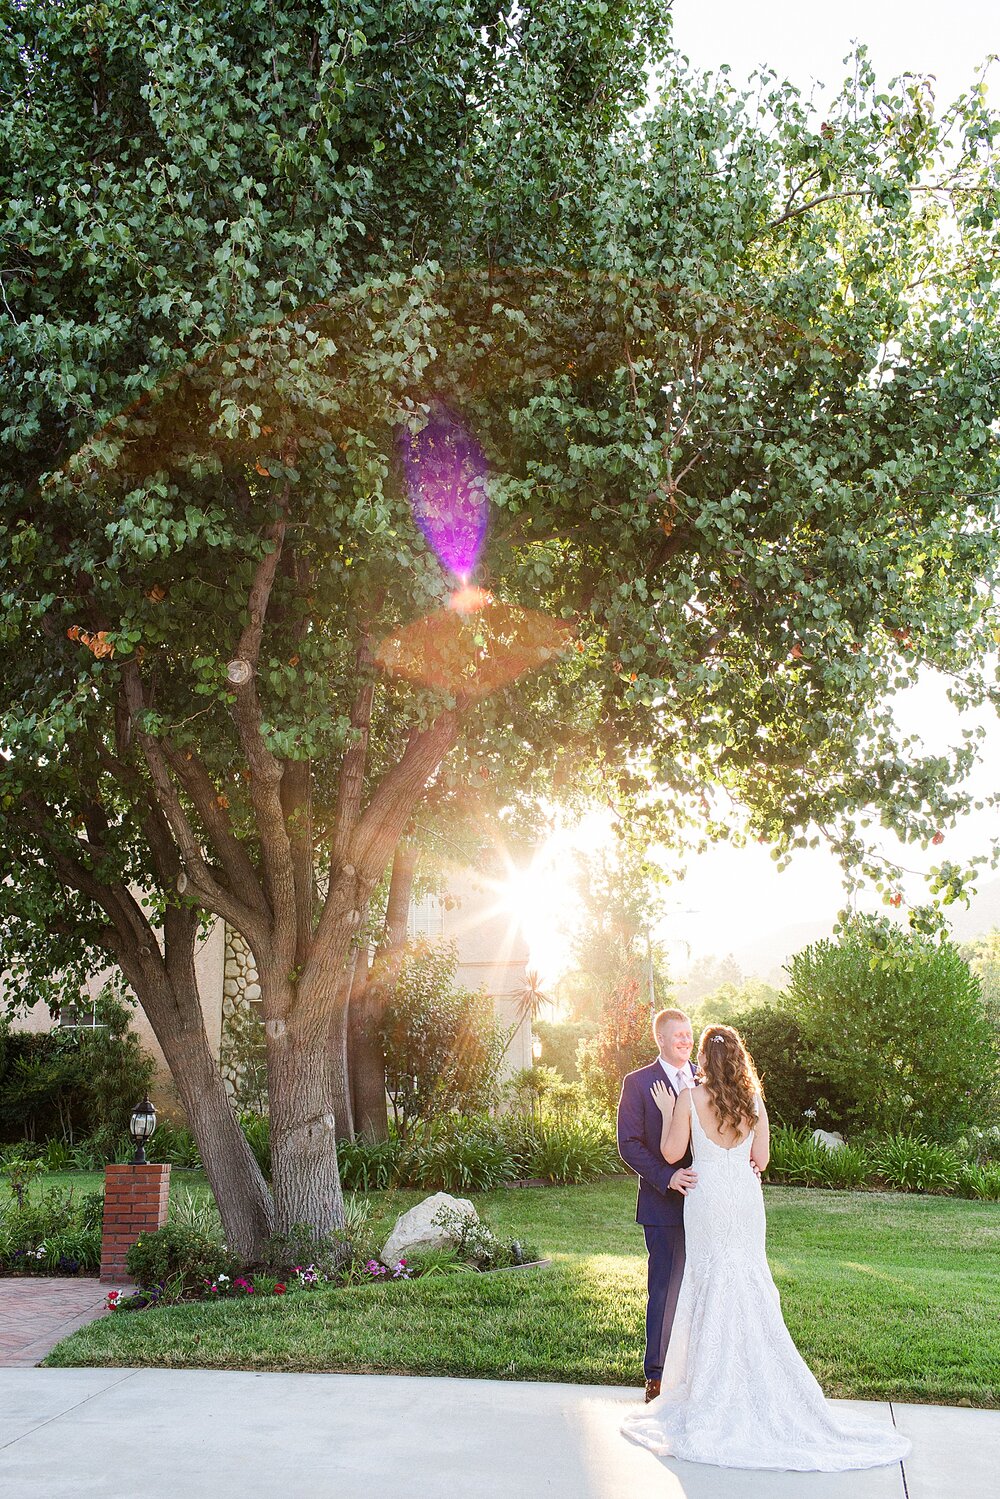 Los Angeles Wedding Photographer | Backyard Wedding Ideas | thevondys.com